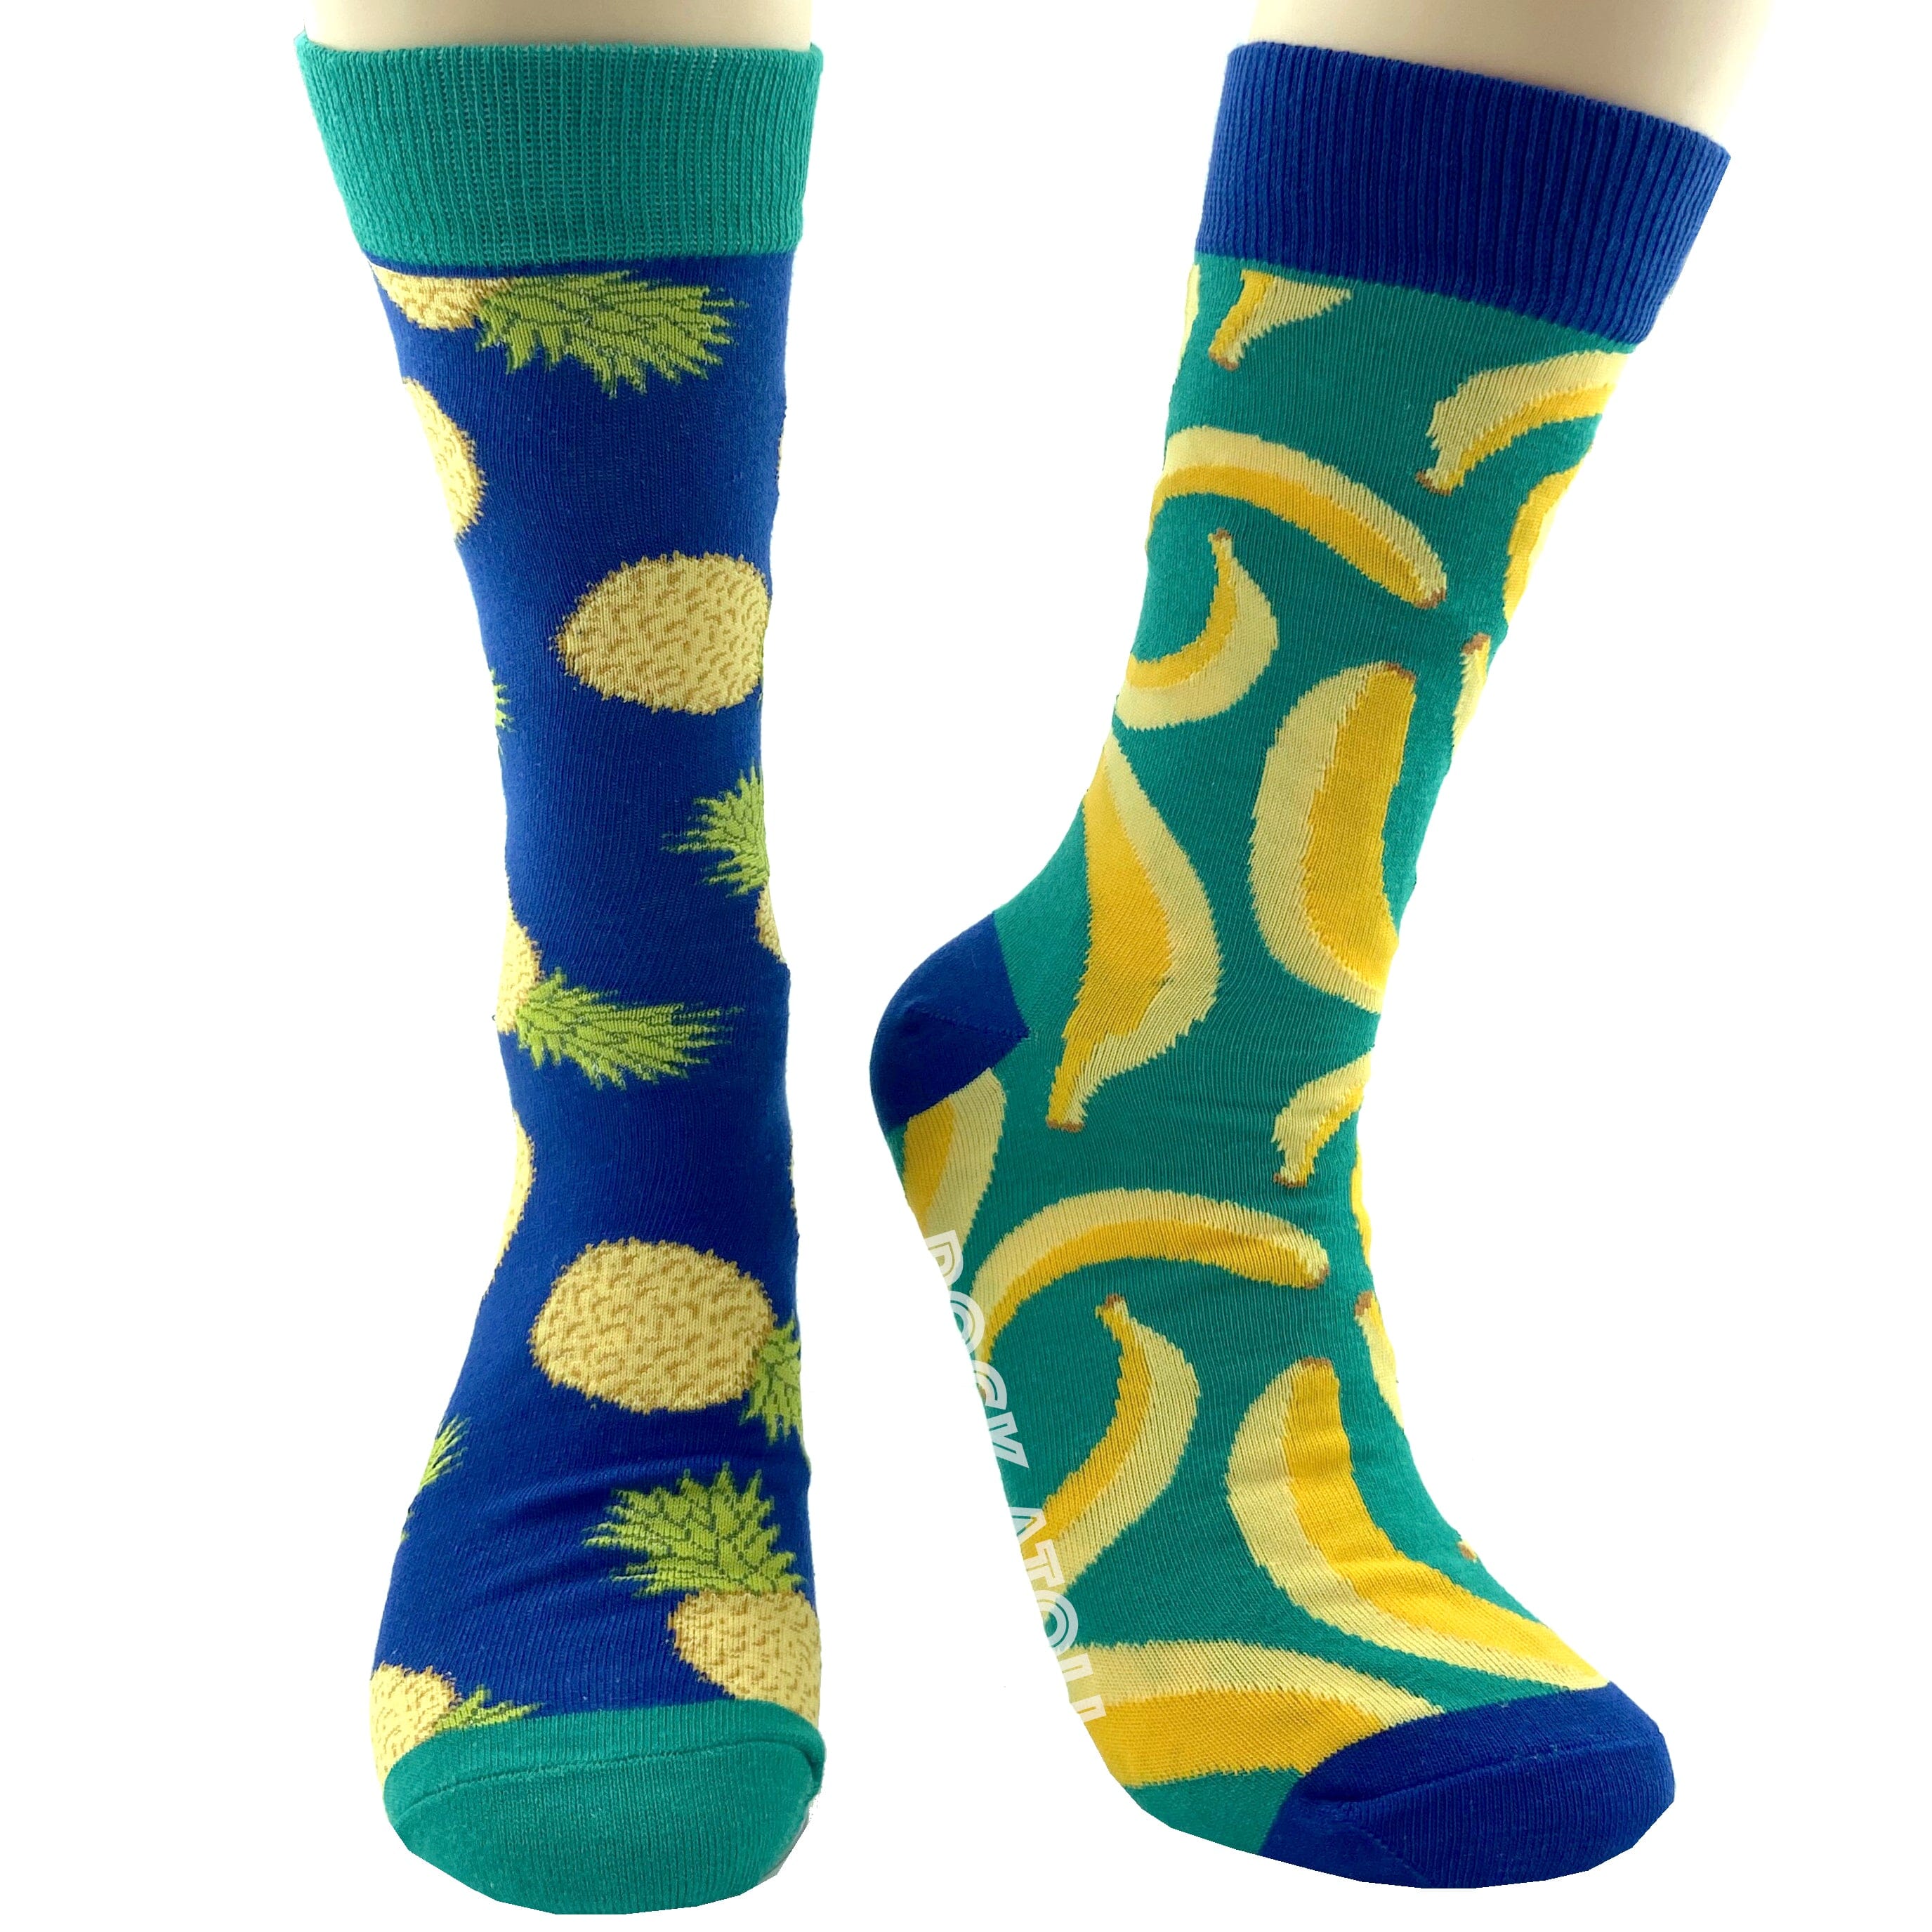 Mix & Match Tropical Fruit Banana & Pineapple Patterned Novelty Socks